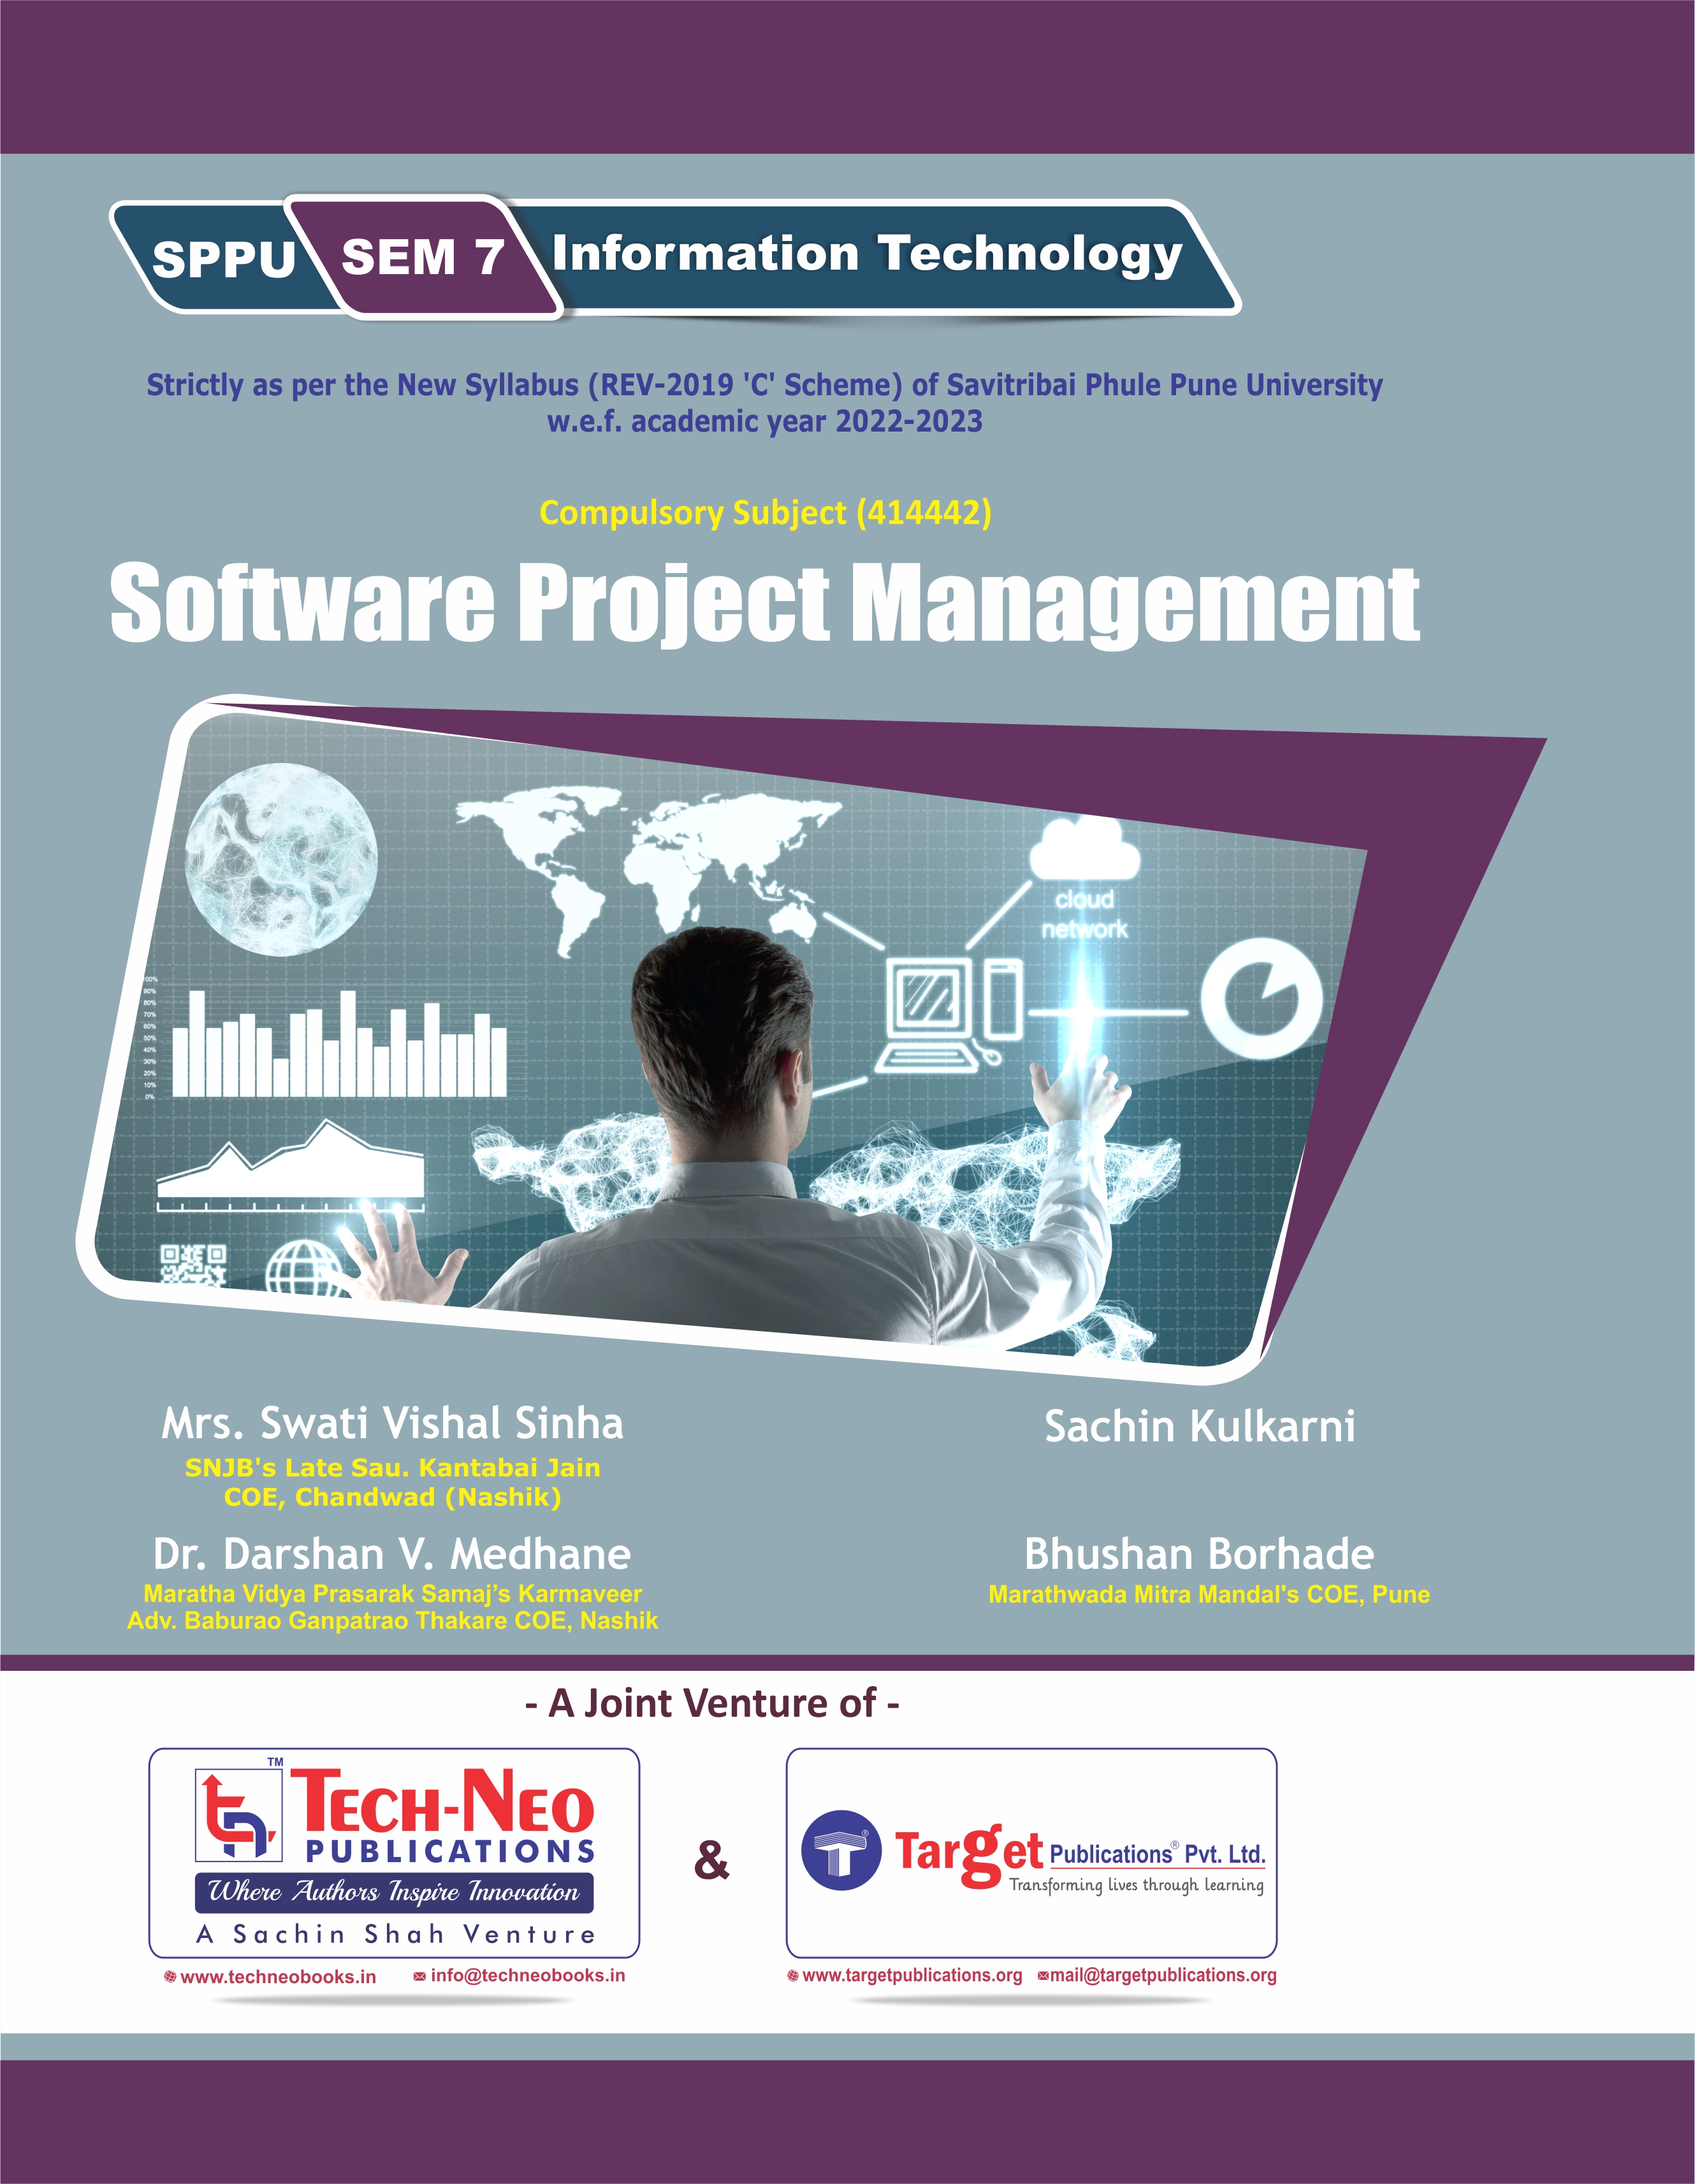 Software project management